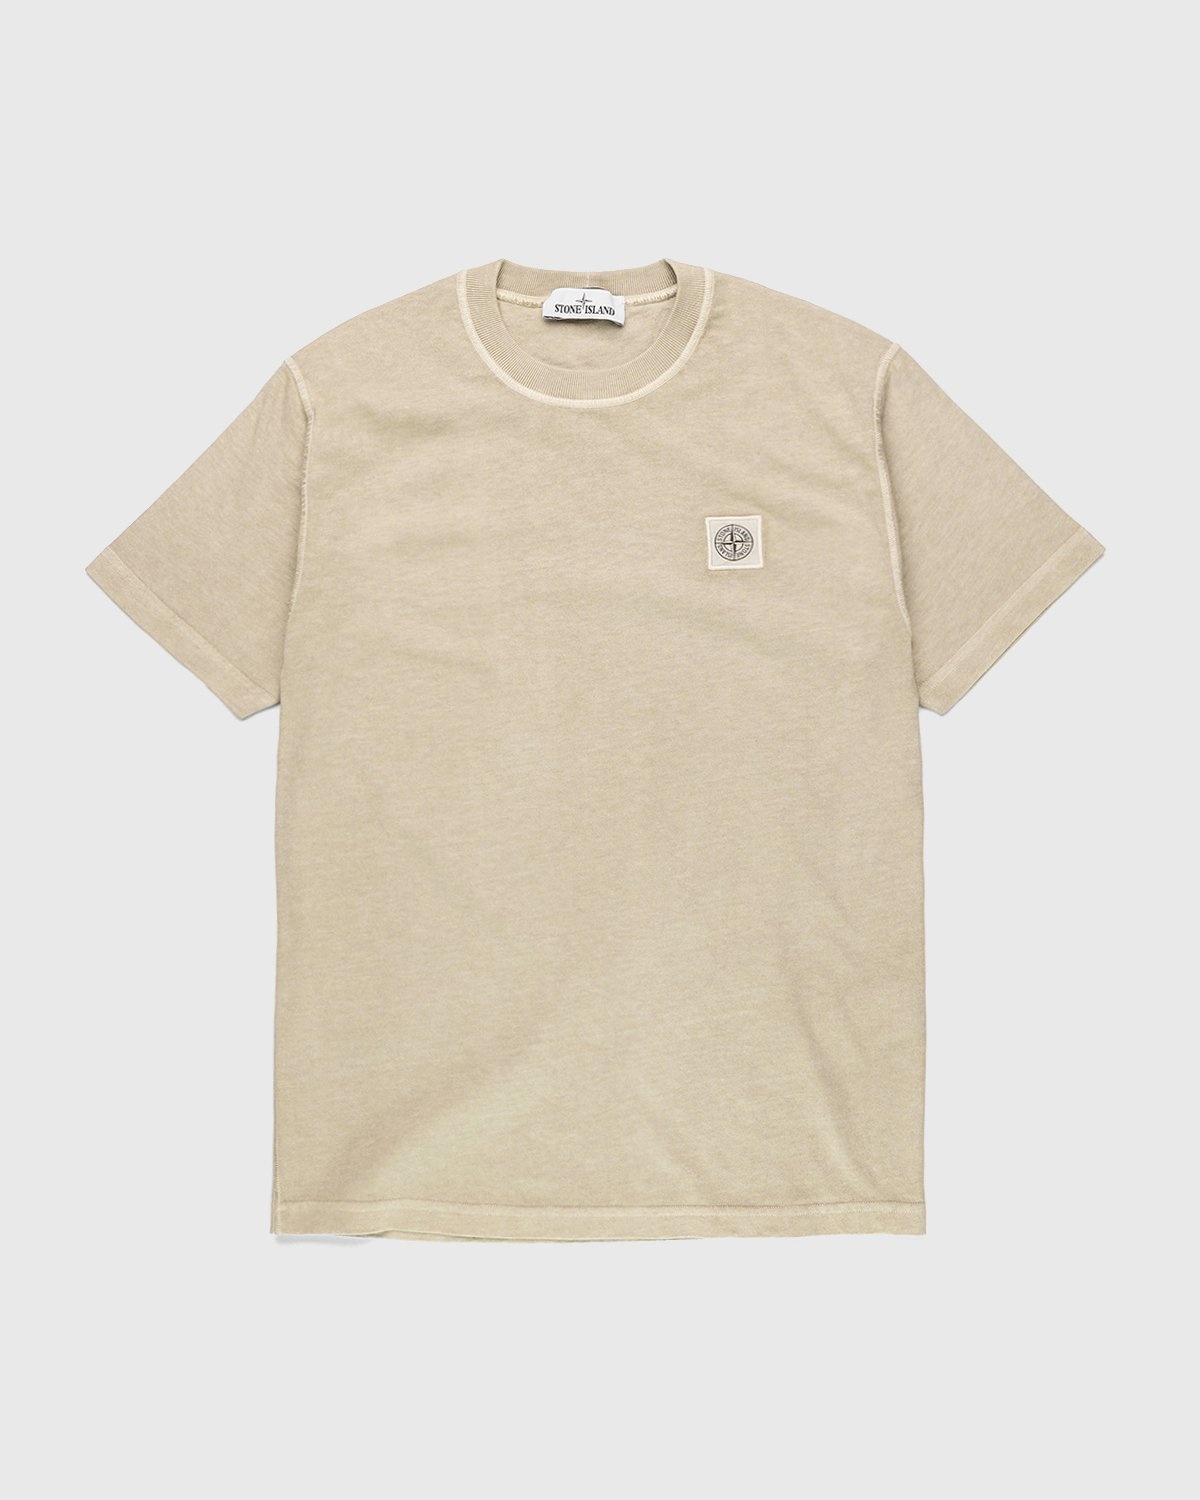 Stone Island – T-Shirt Natural Beige - Tops - Beige - Image 1